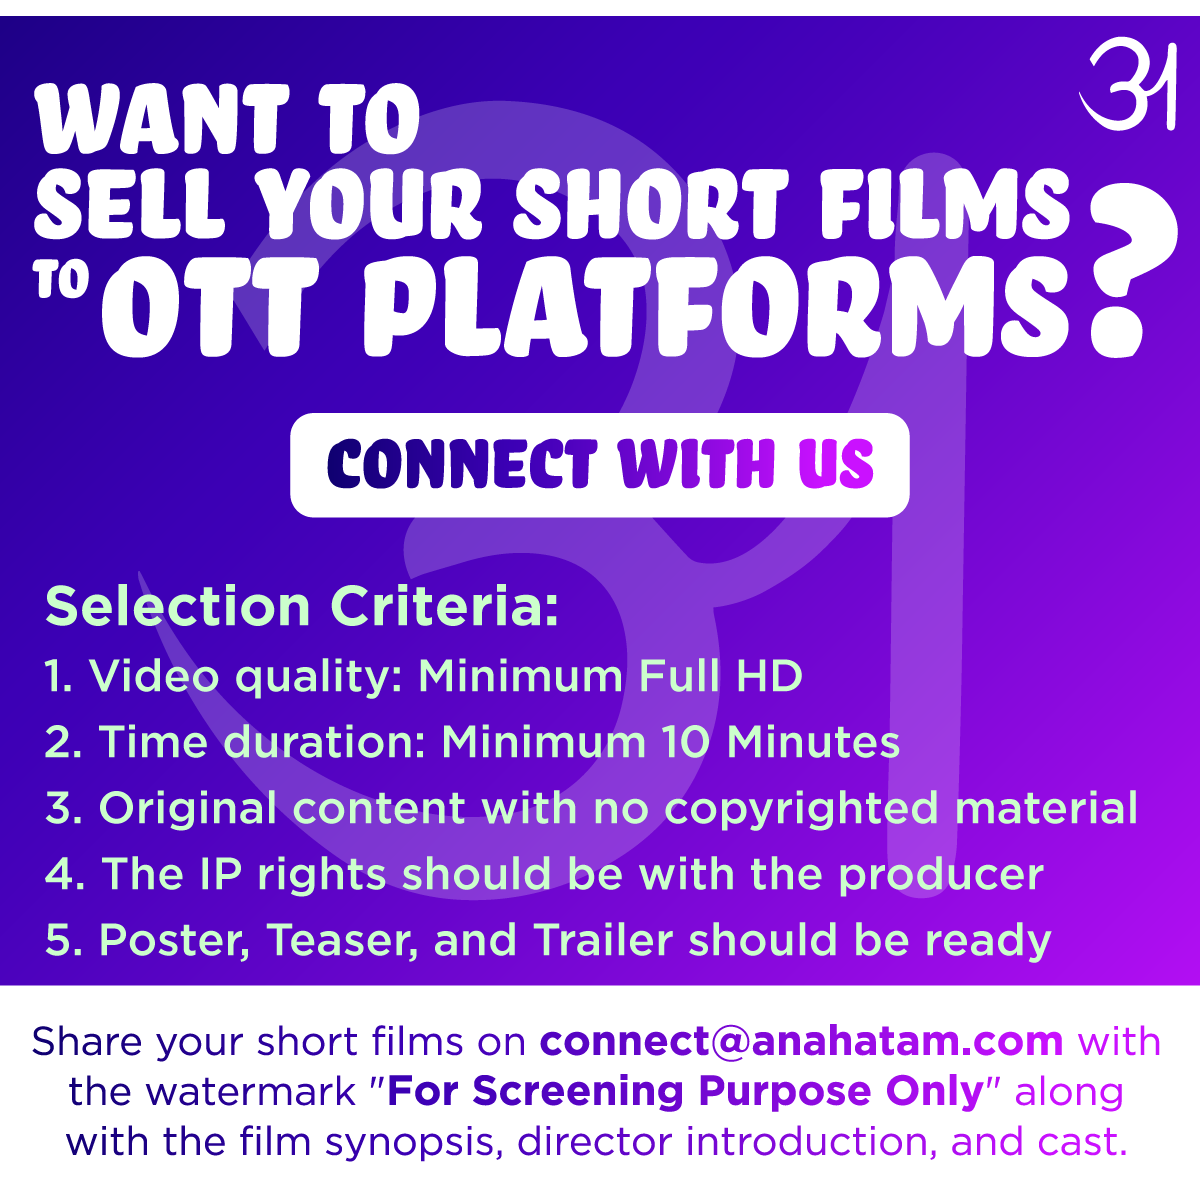 Want to sell your short film to OTT platforms?
..
#shortfilms #sellshortfilm #shortfilm #sellfilms #ottplatform #filmmakers #independentfilmmaker #indianott #filmproduction #filmmakingrequirements #filmhelp #shortfilmfestival #filmfestival #filmfeed #selling #ott  #filmfestivals